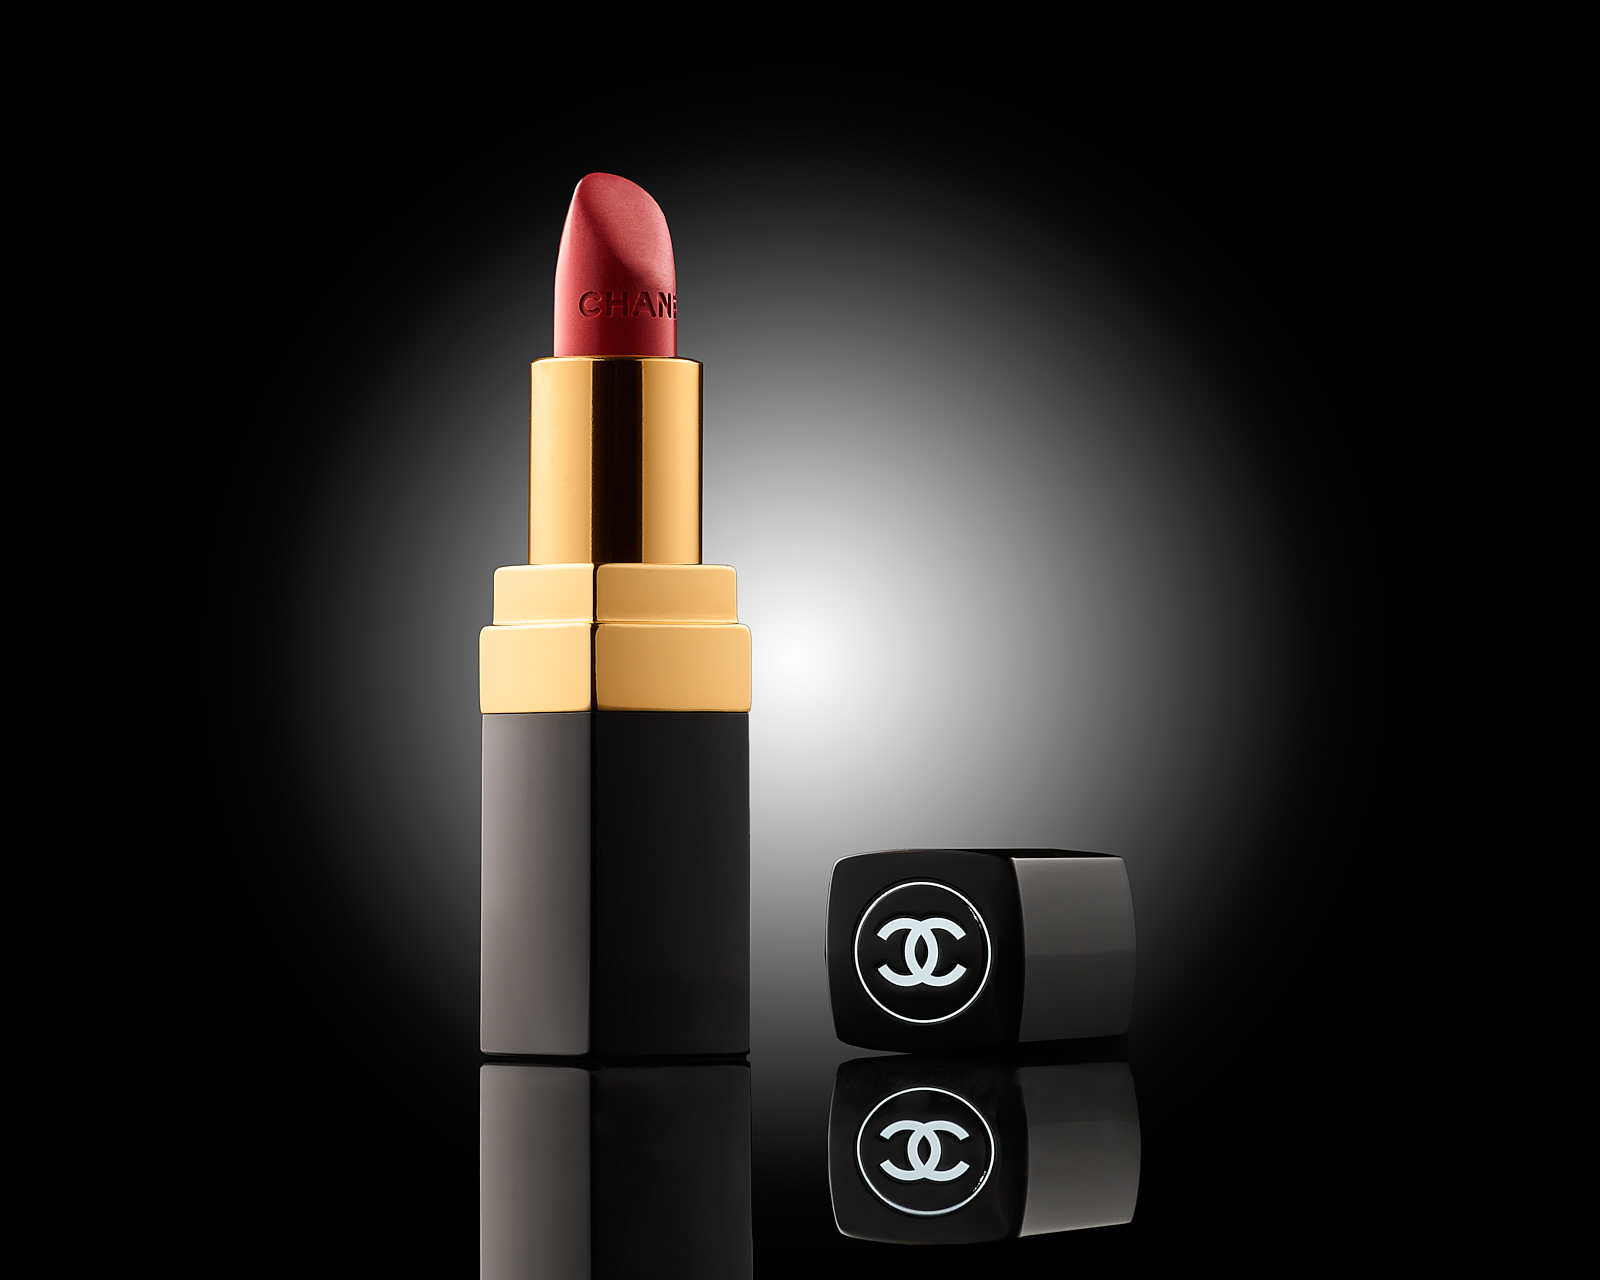 Chanel lipstick on black glow background